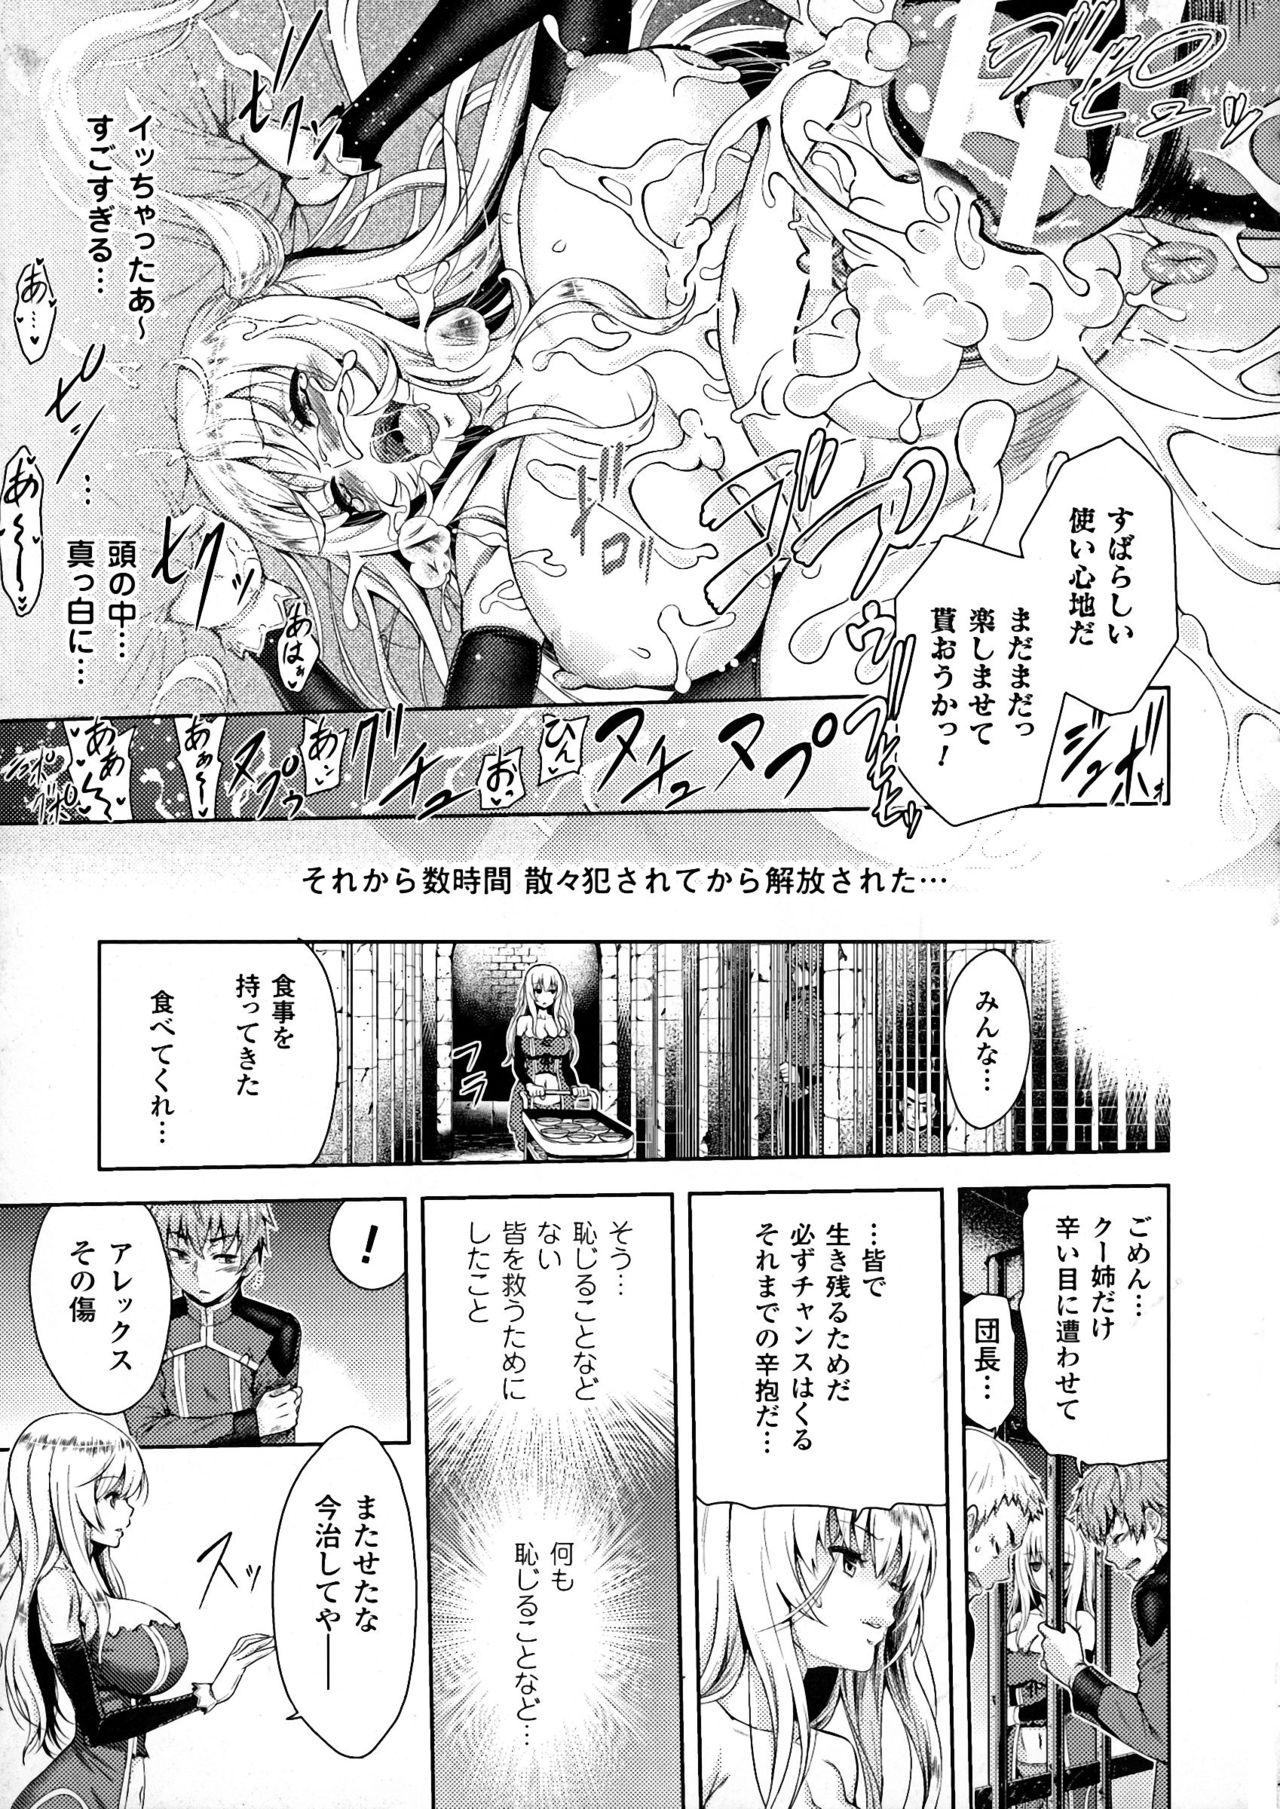 Seigi no Heroine Kangoku File DX Vol. 7 27